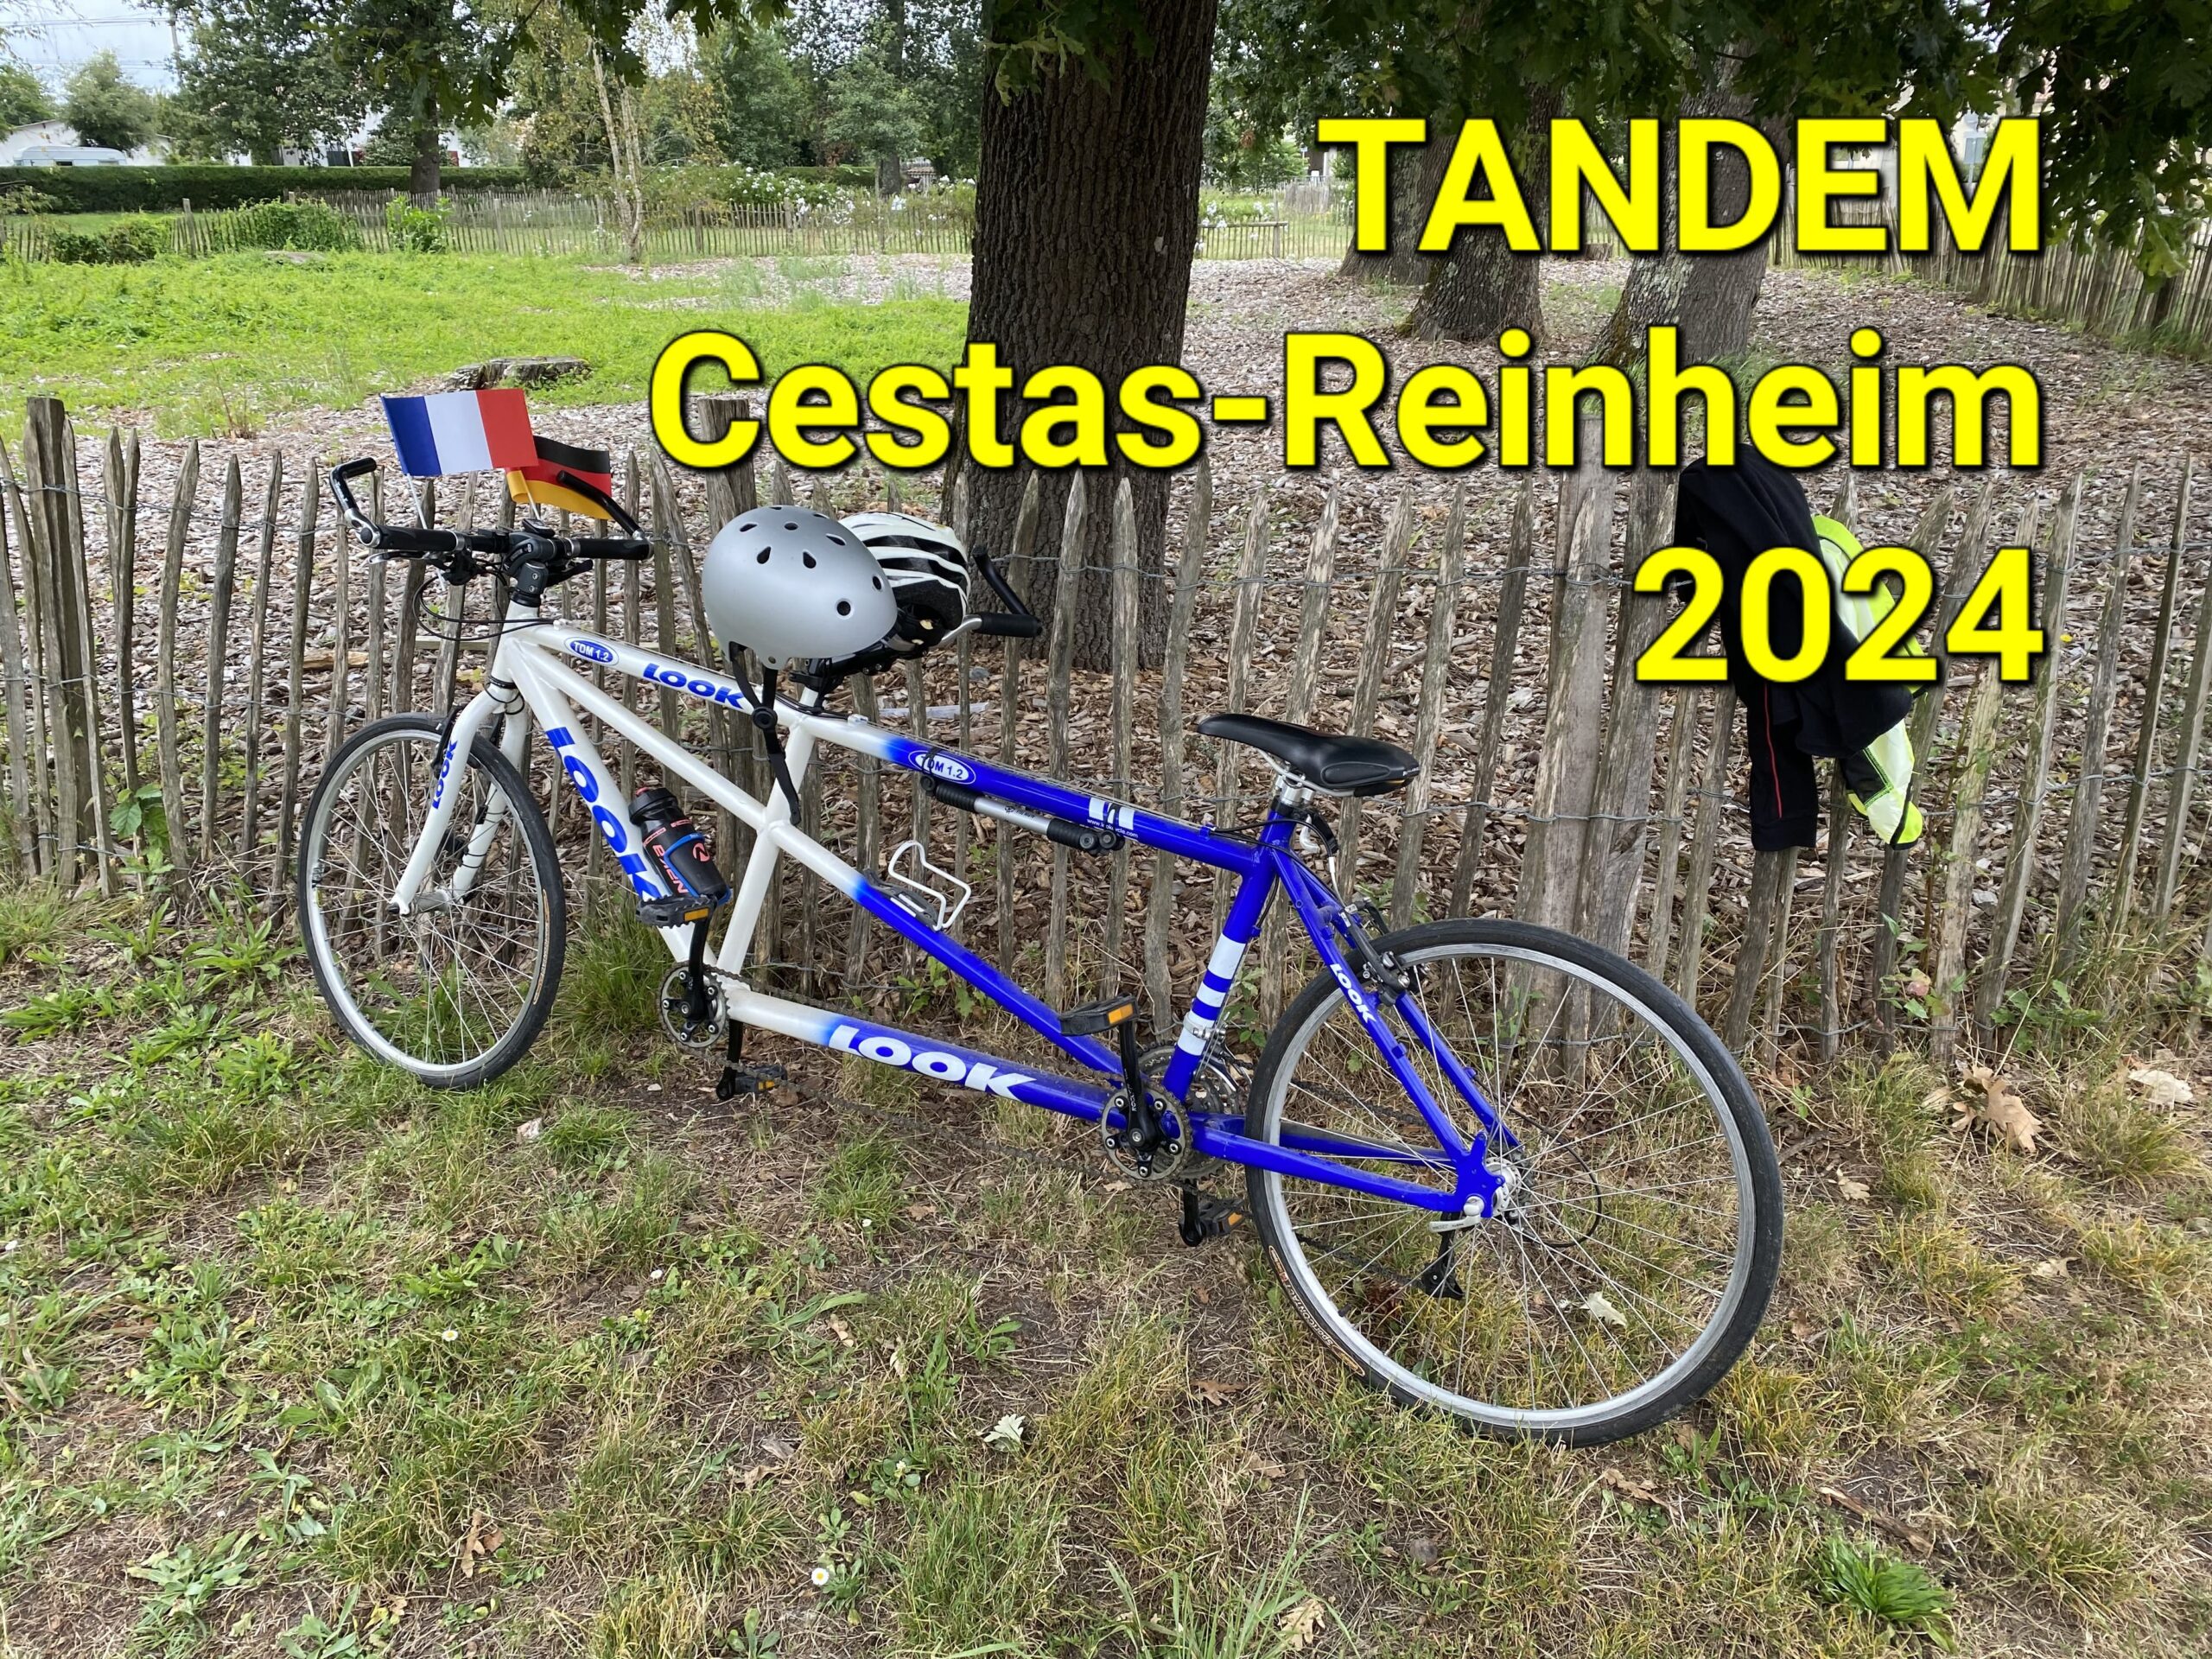 Cours de langue en tandem Cestas-Reinheim 2024